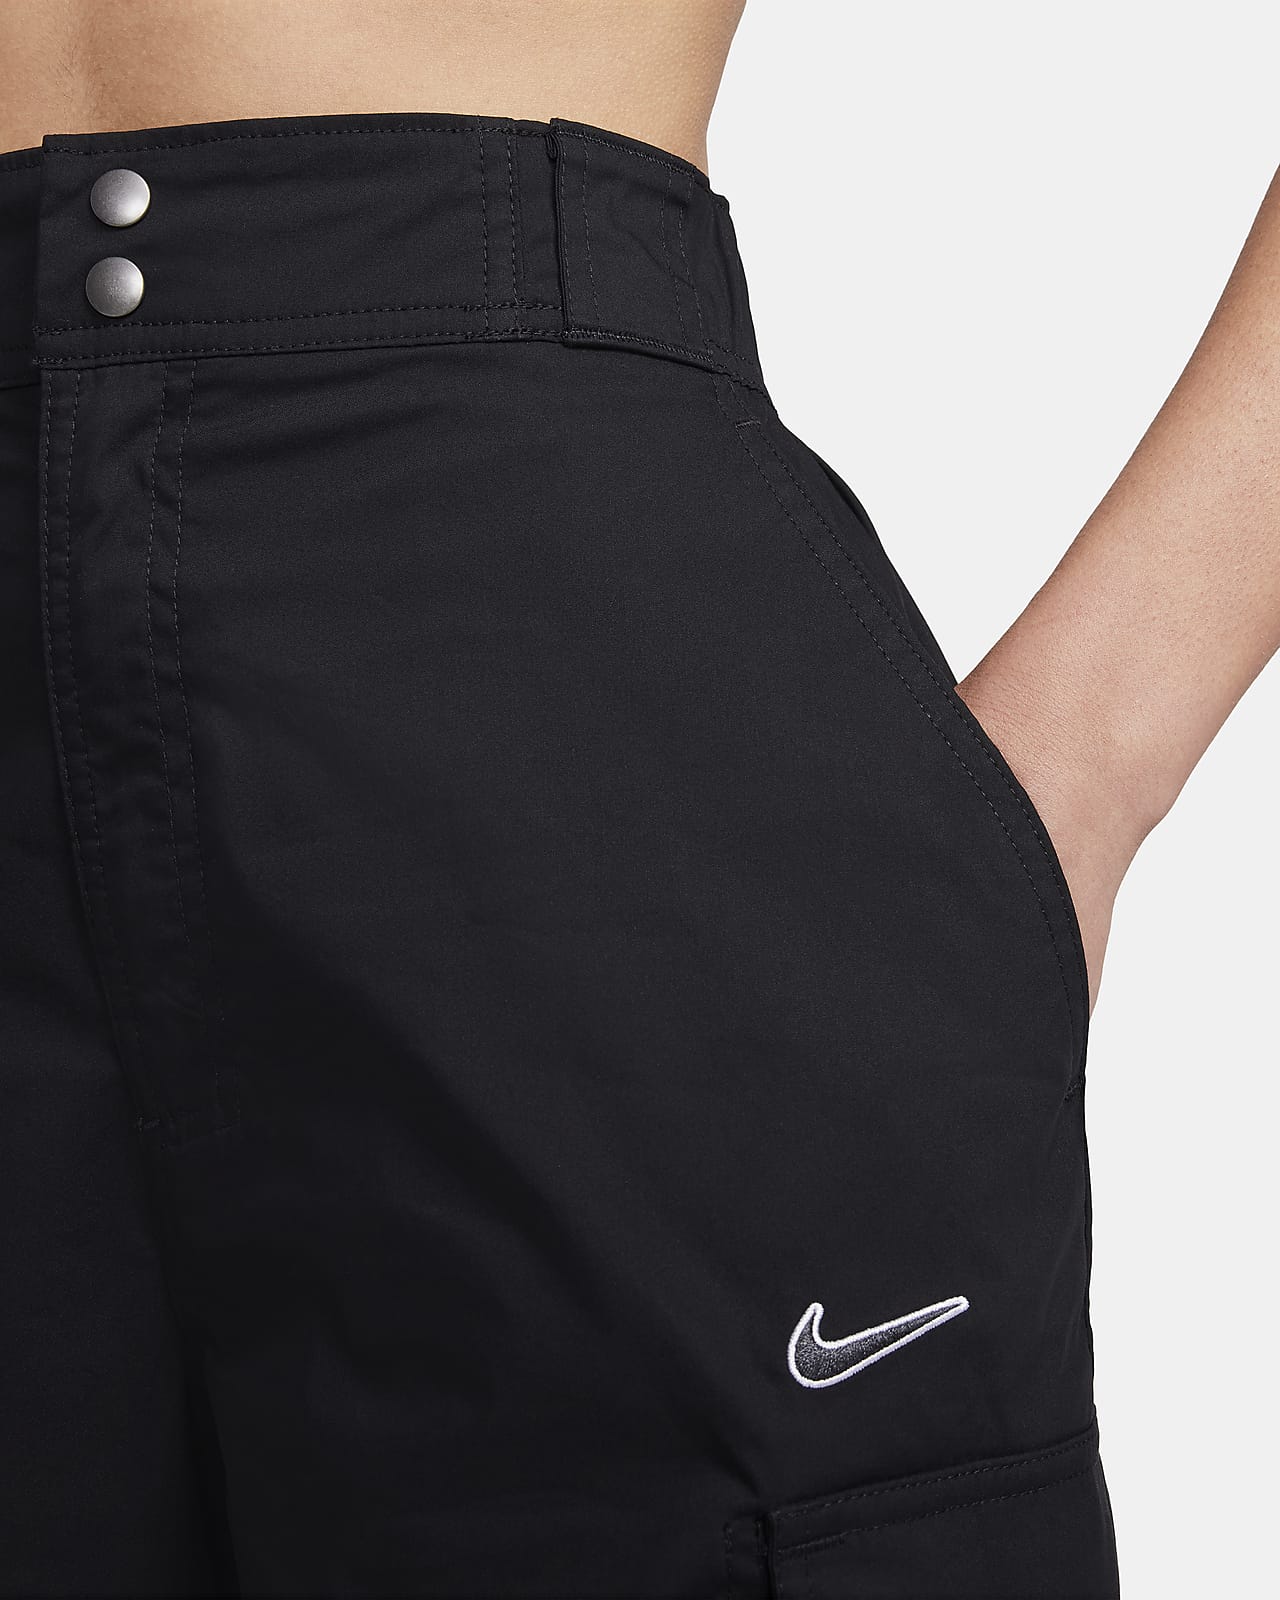 Nike Women's Sportswear Icon Clash Woven Mid-Rise Pants - Size S